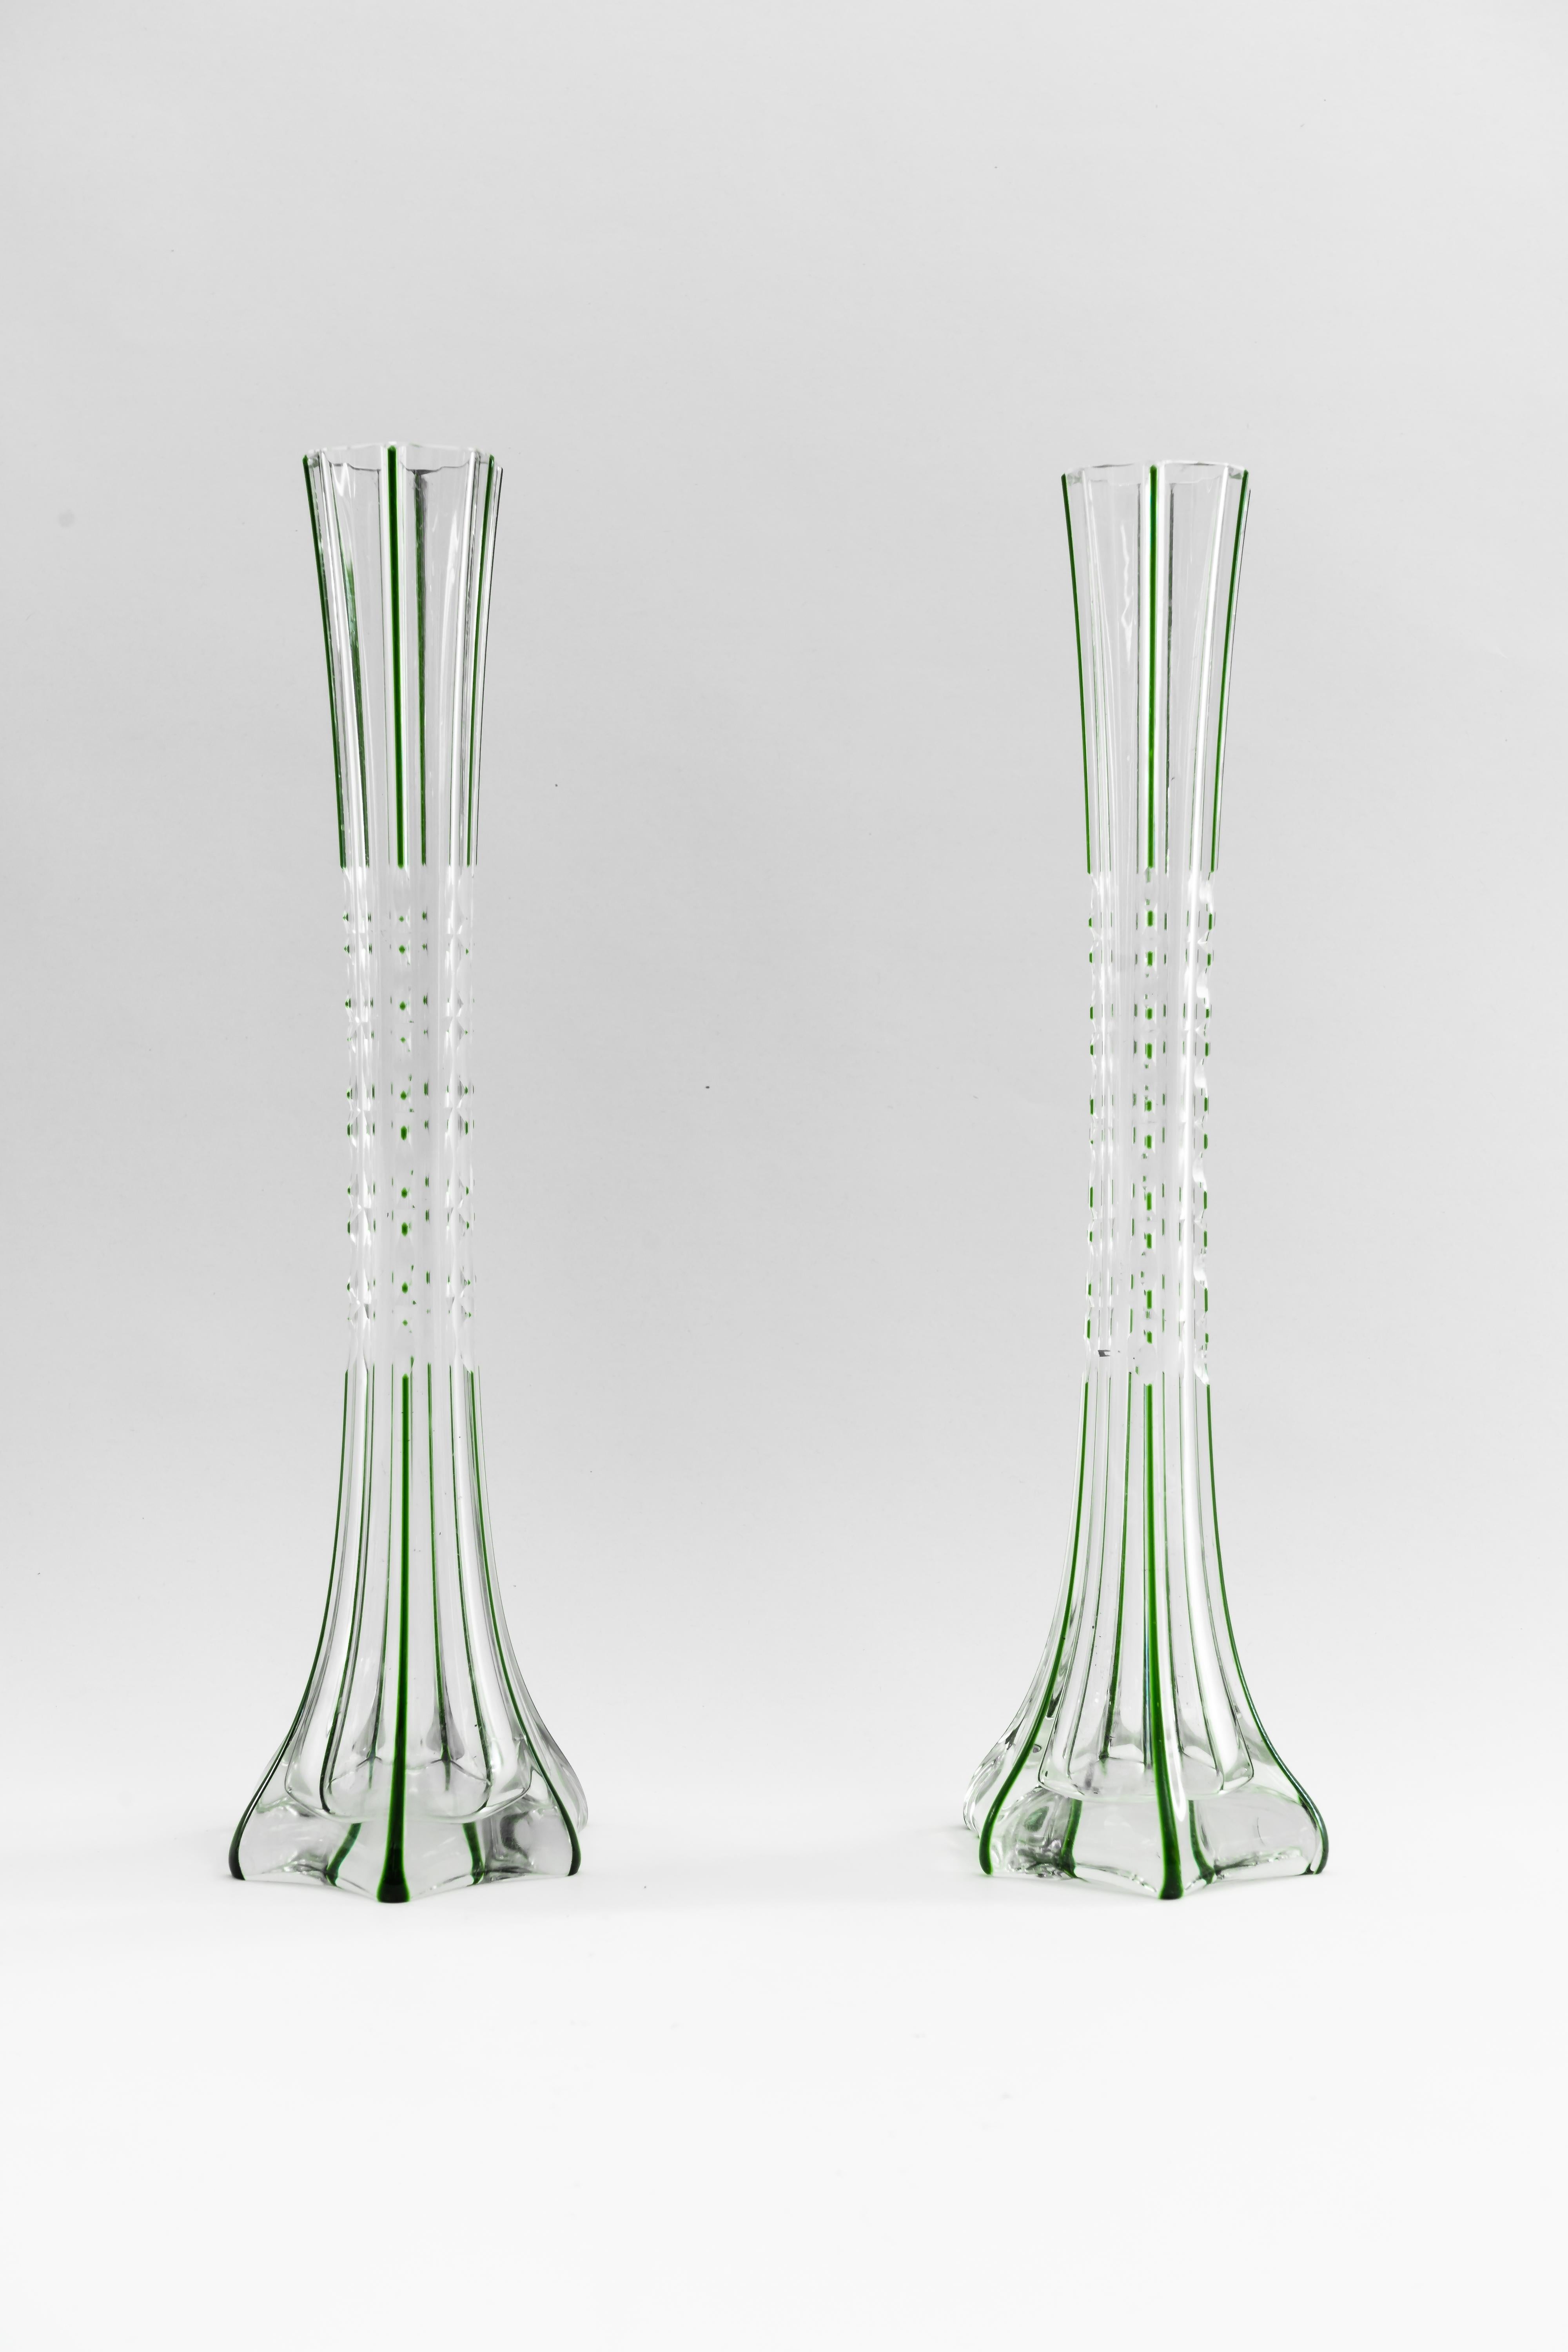 Two Art Deco glass vases, Vienna, circa 1920s
Original condition
Partially cut-glass
Pair price.